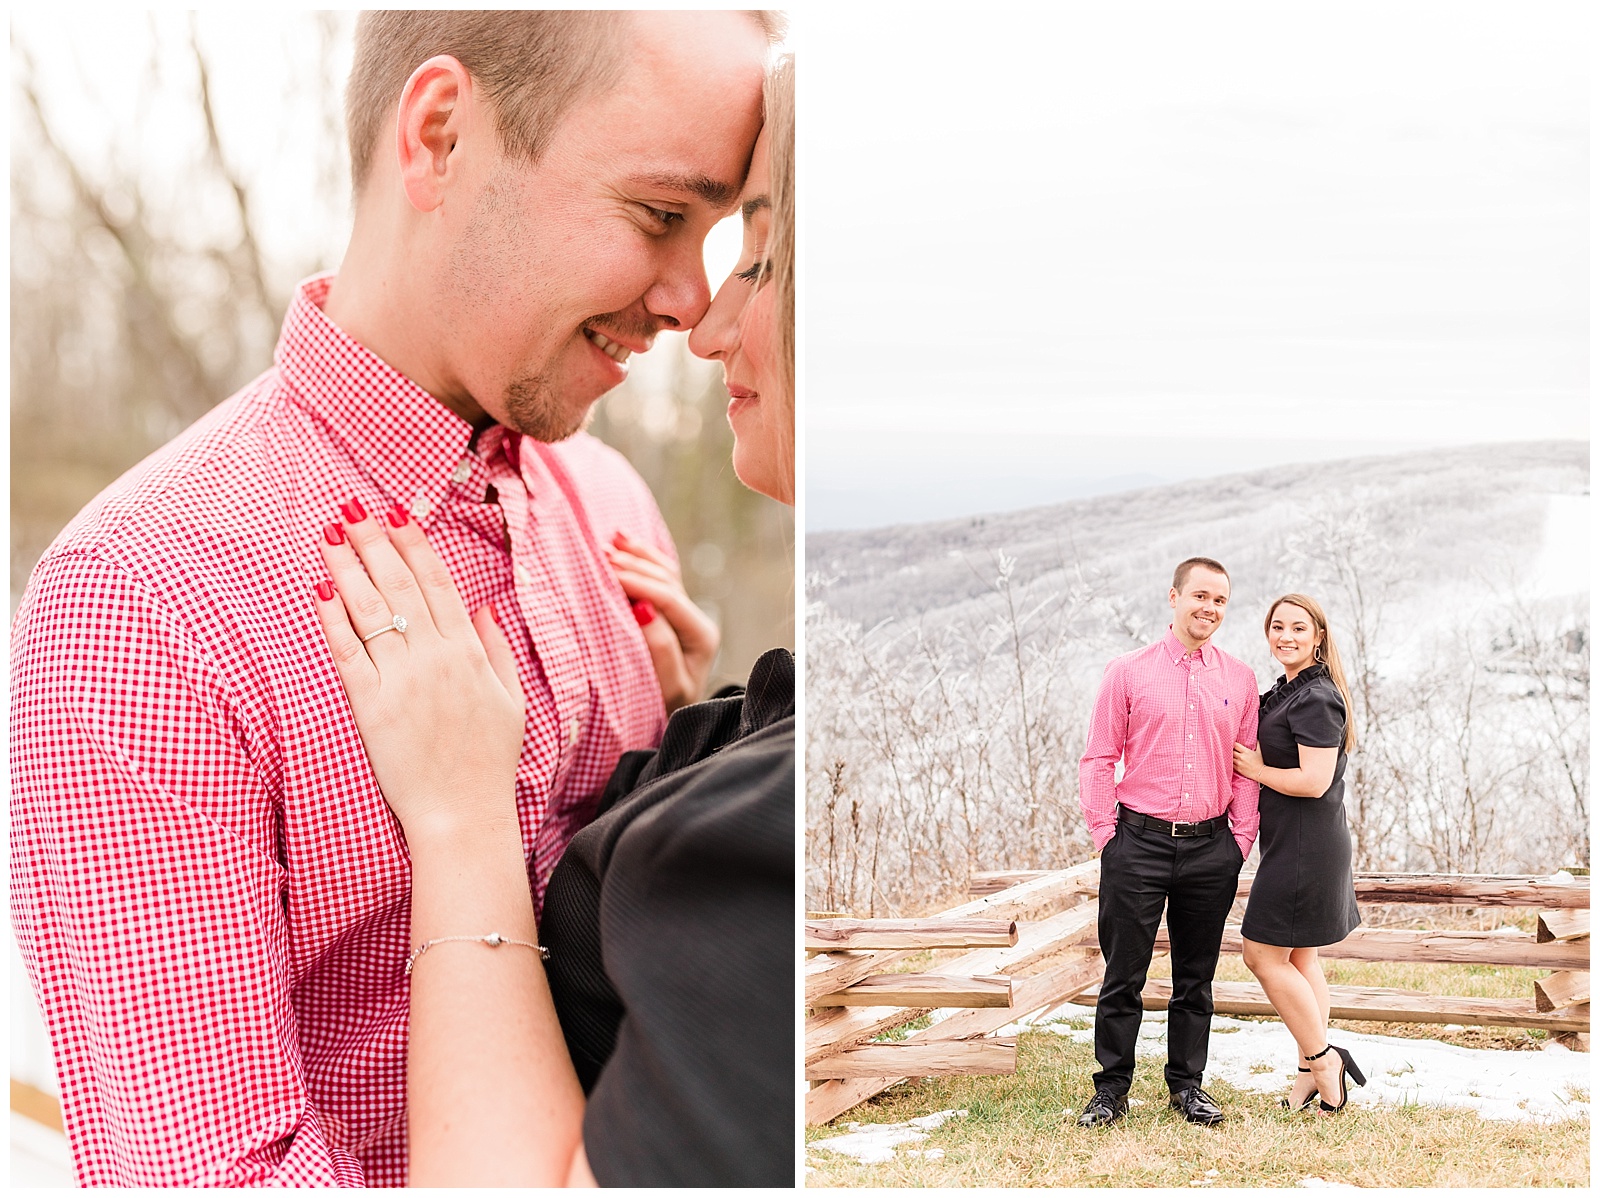 A Snowy Wintergreen Proposal | Sean and Lindsey | Virginia Wedding Photographer20.jpg